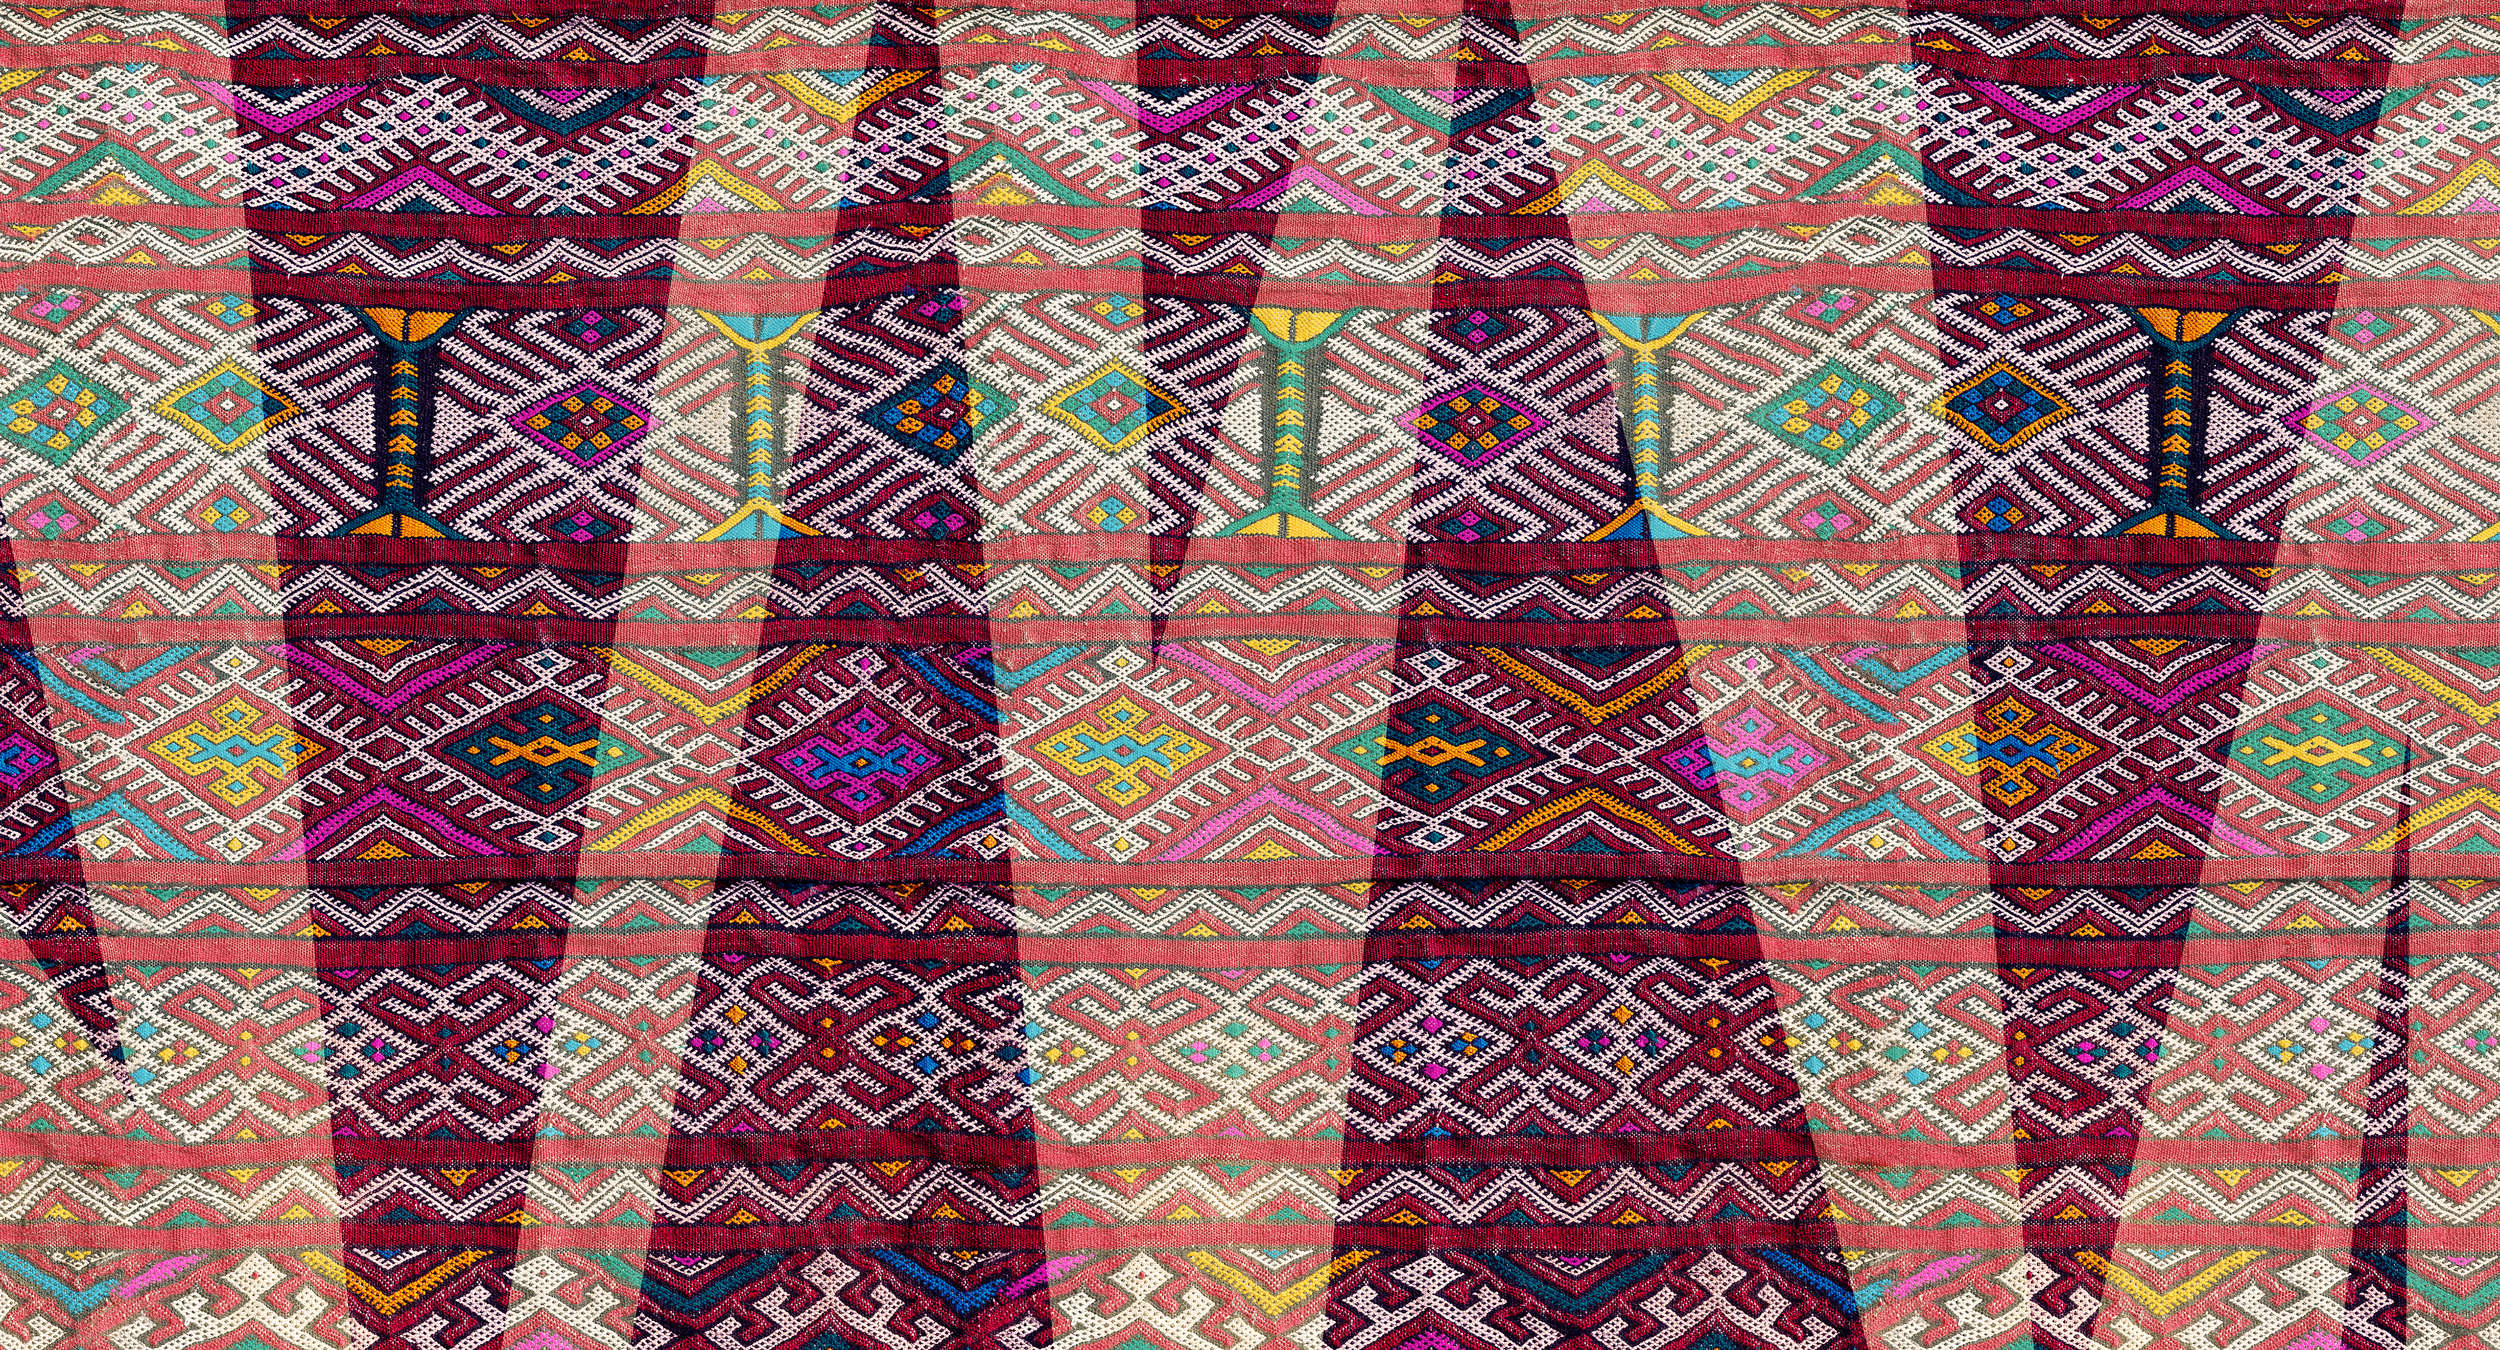             Photo wallpaper ethnic style with indigenous woven pattern - purple, green, orange
        